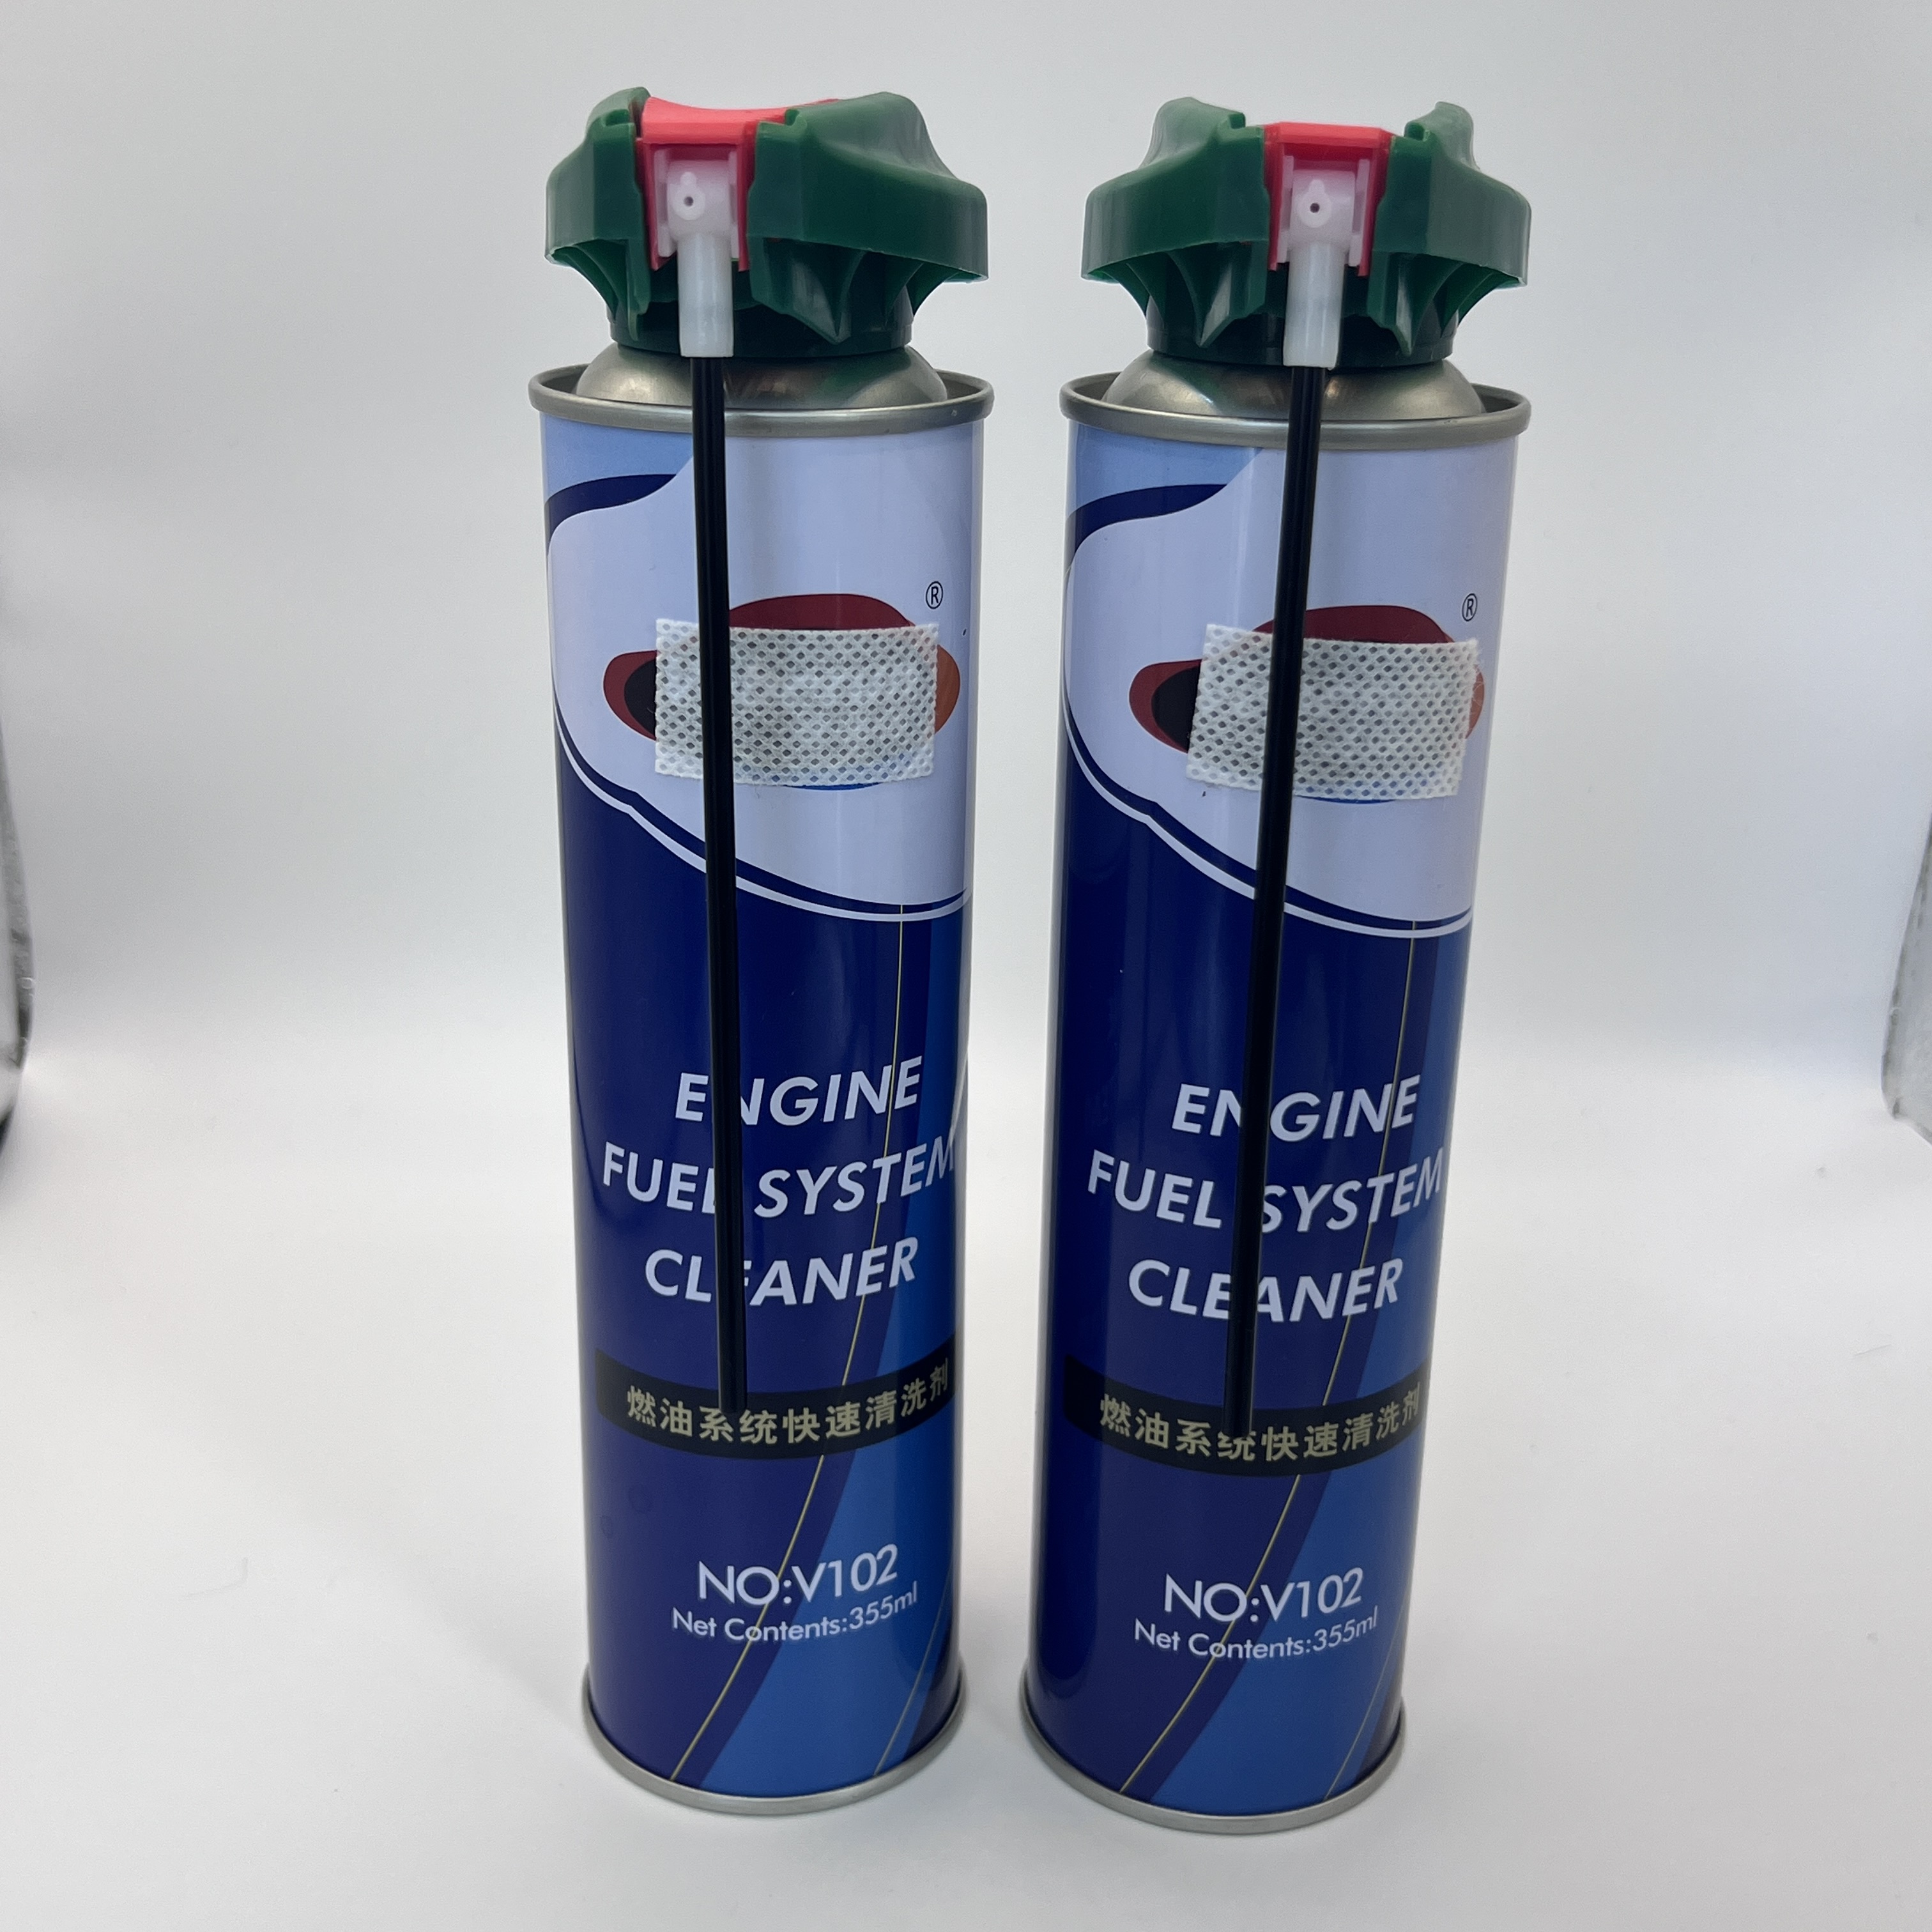 Precision Aerosol Spray Valve - Accurate Solution for Fine Spraying Tasks